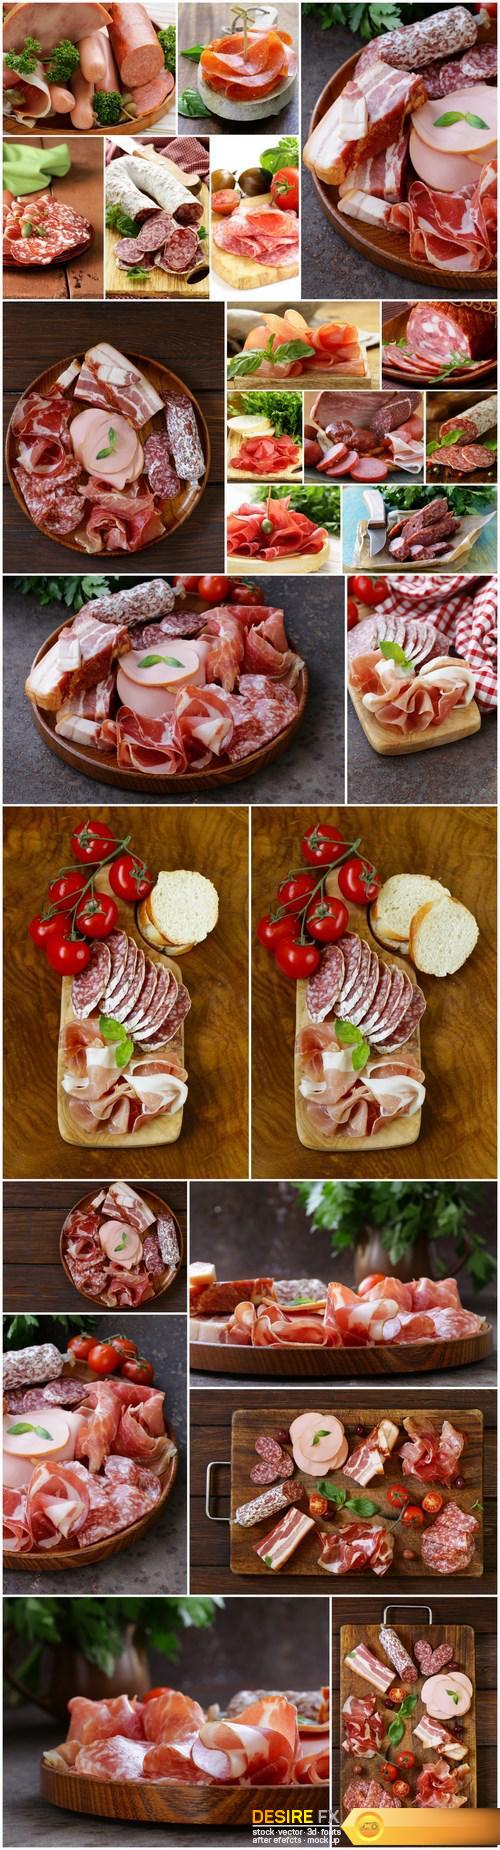 Assorted deli meats - ham, sausage, salami, parma, prosciutto, bacon - 14xUHQ JPEG Photo Stock